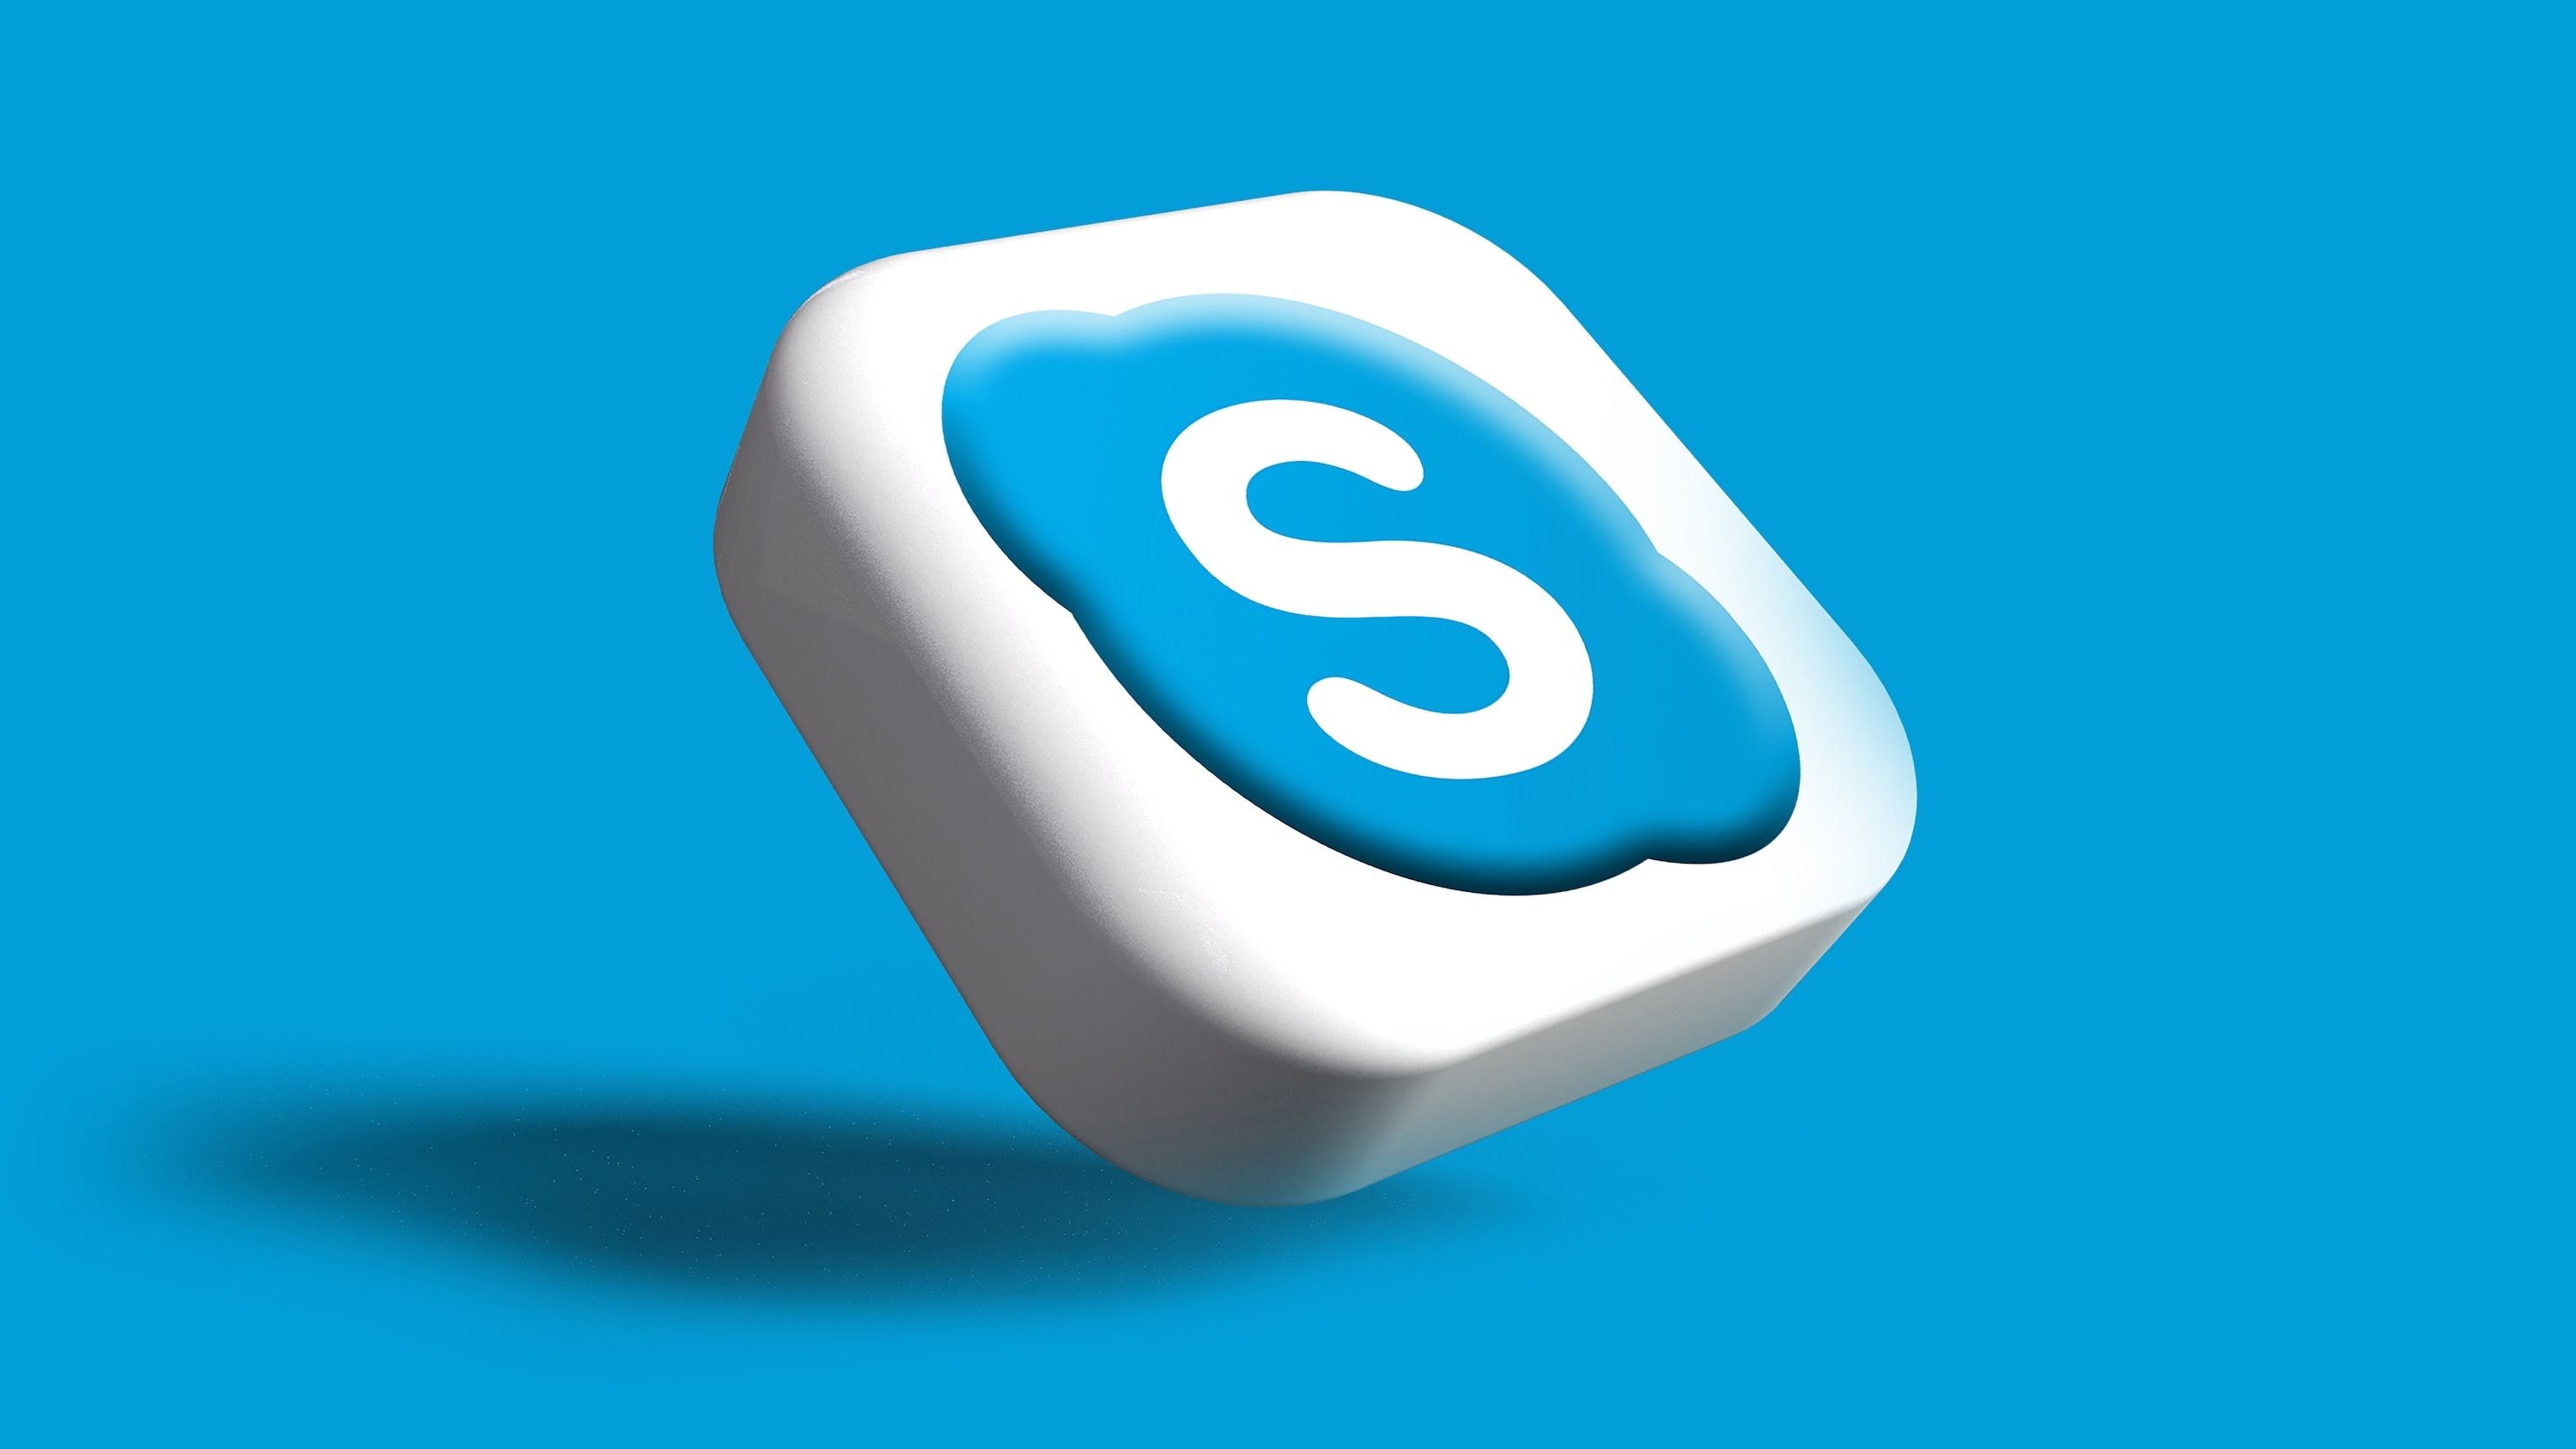 Skype 3d logo on blue background